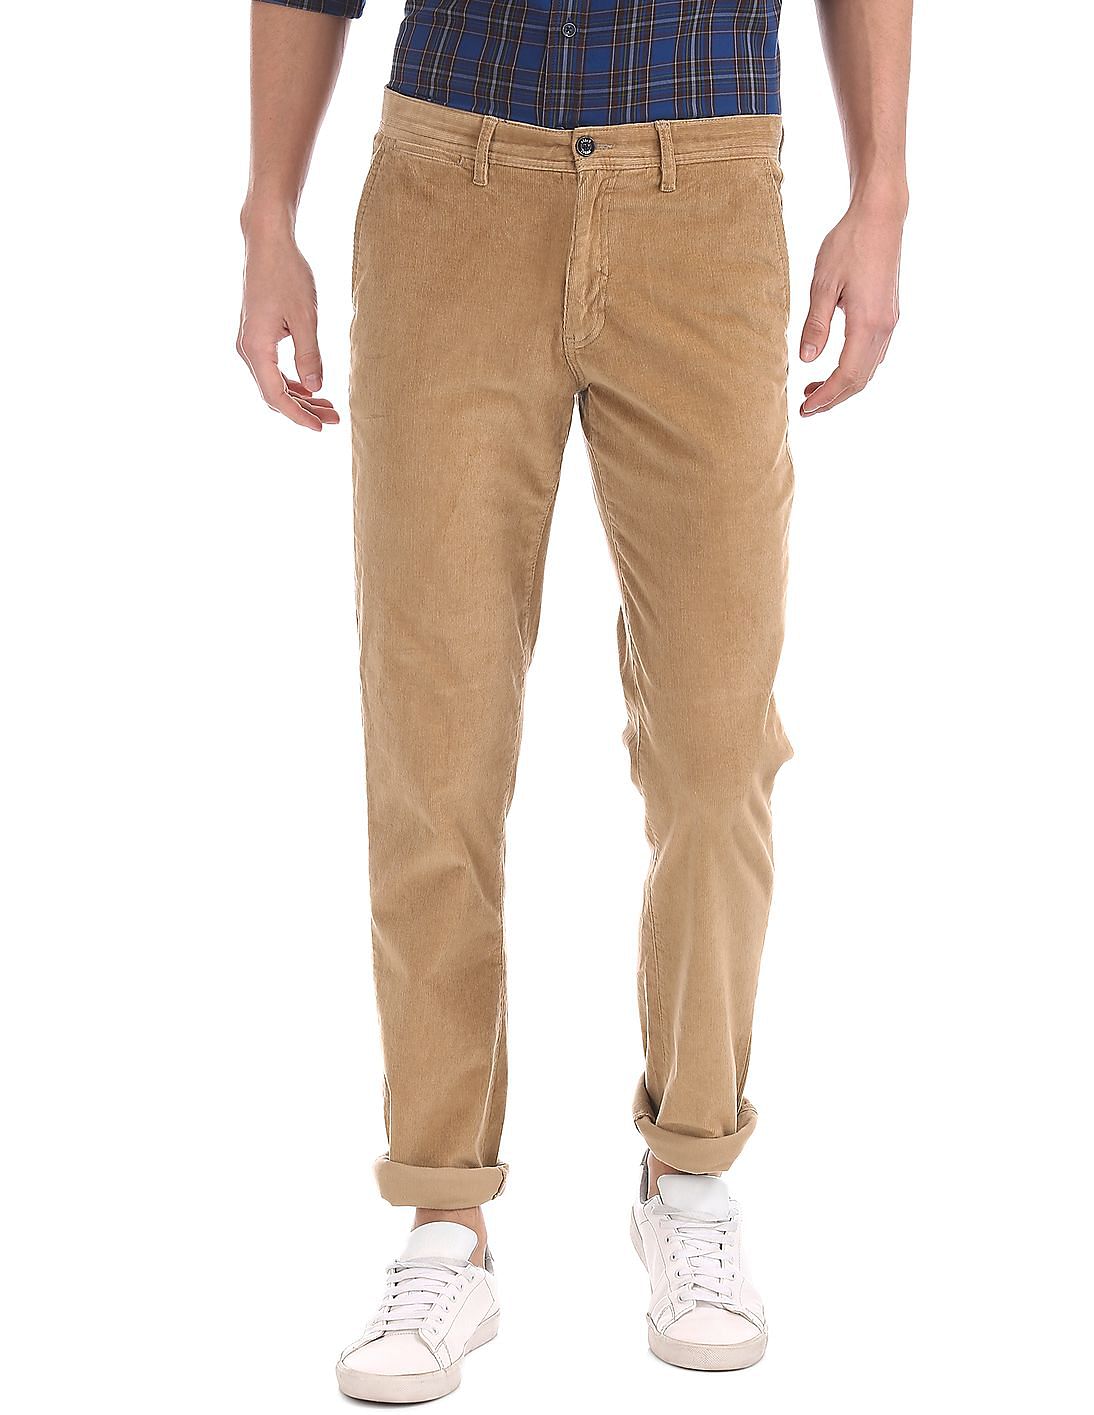 Buy Men Slim Fit Corduroy Trousers online at NNNOW.com